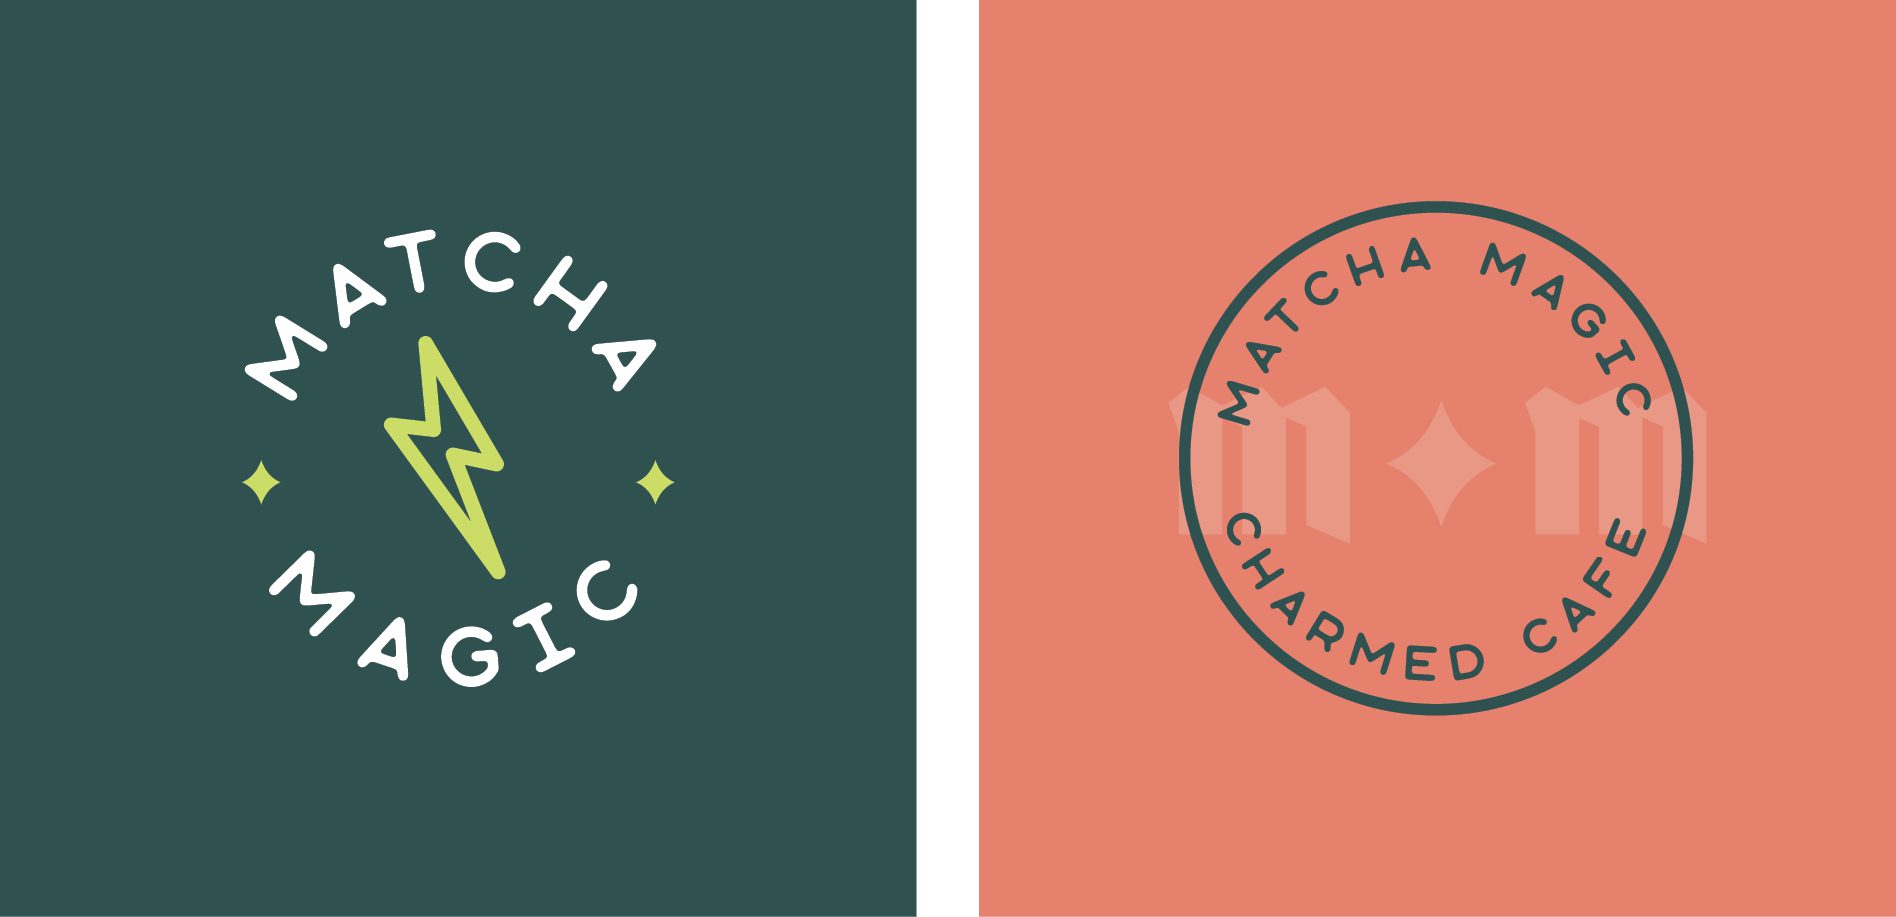 Matcha Magic Cafe - LOGO Restaurant Branding